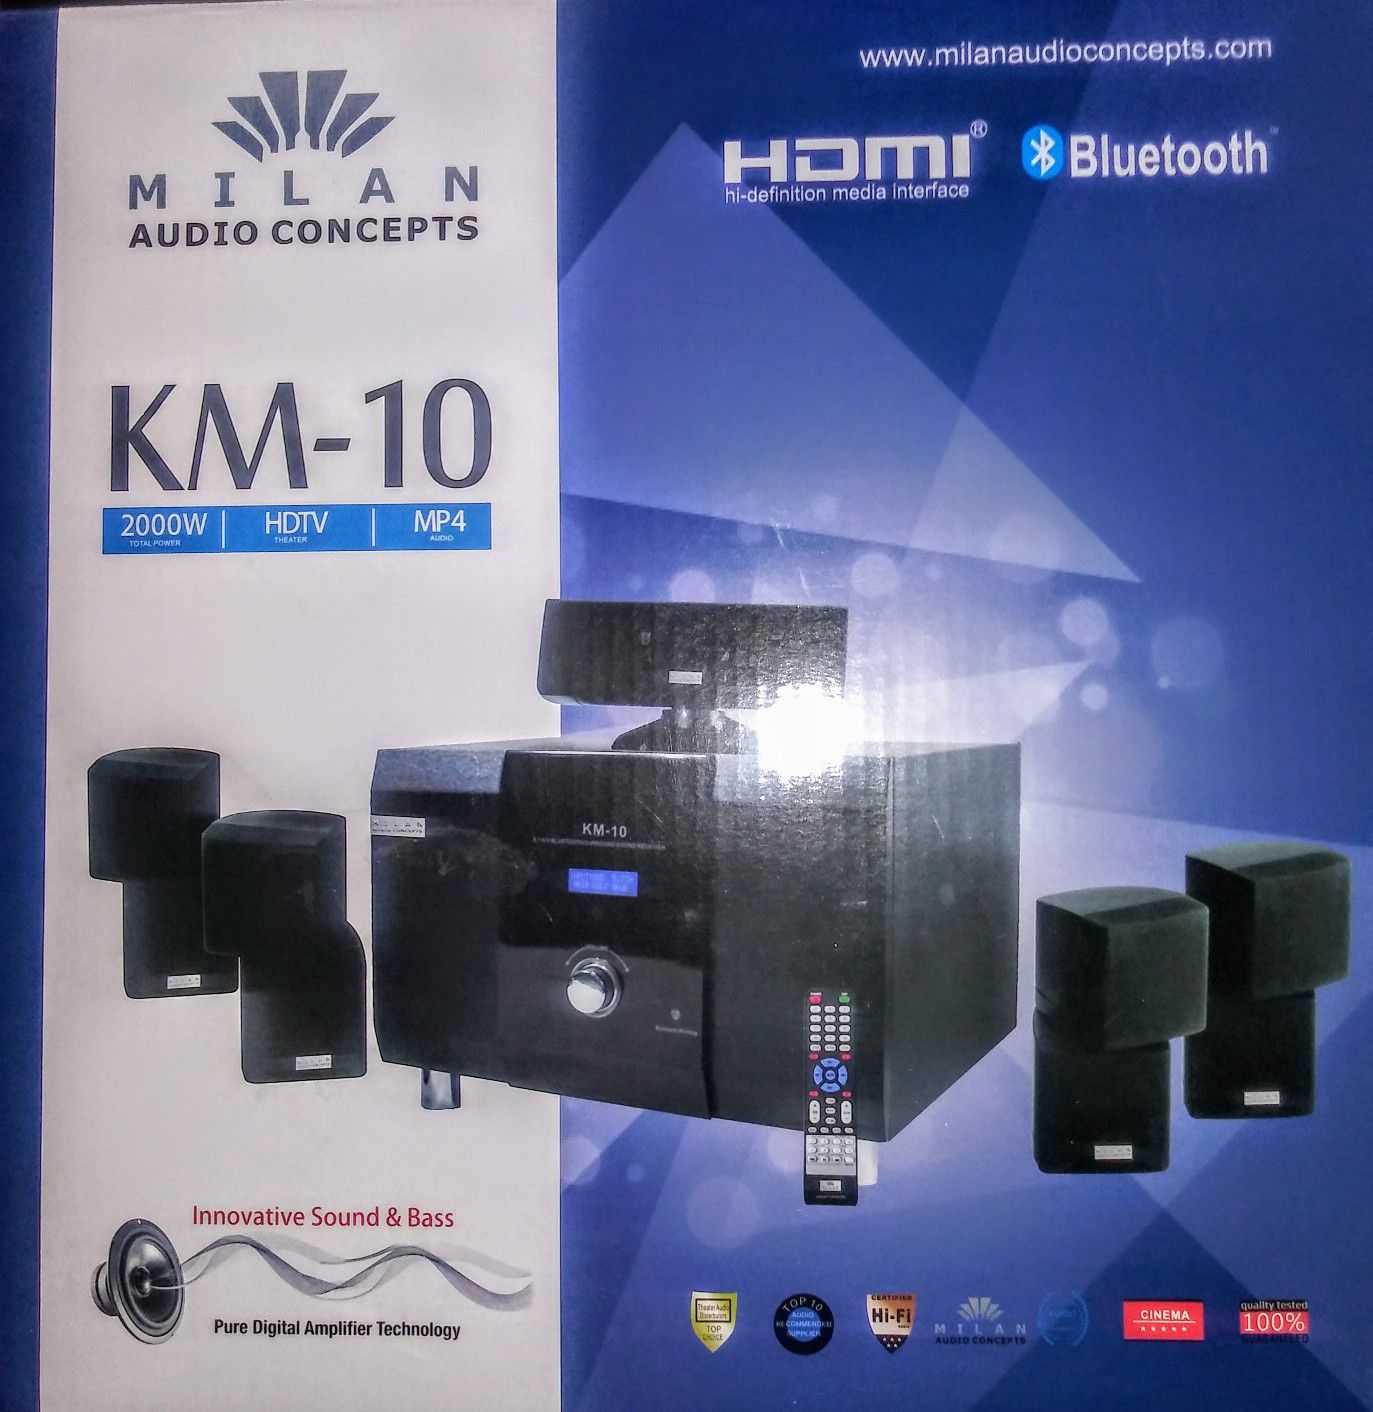 KM-10 Milan Audio Concepts